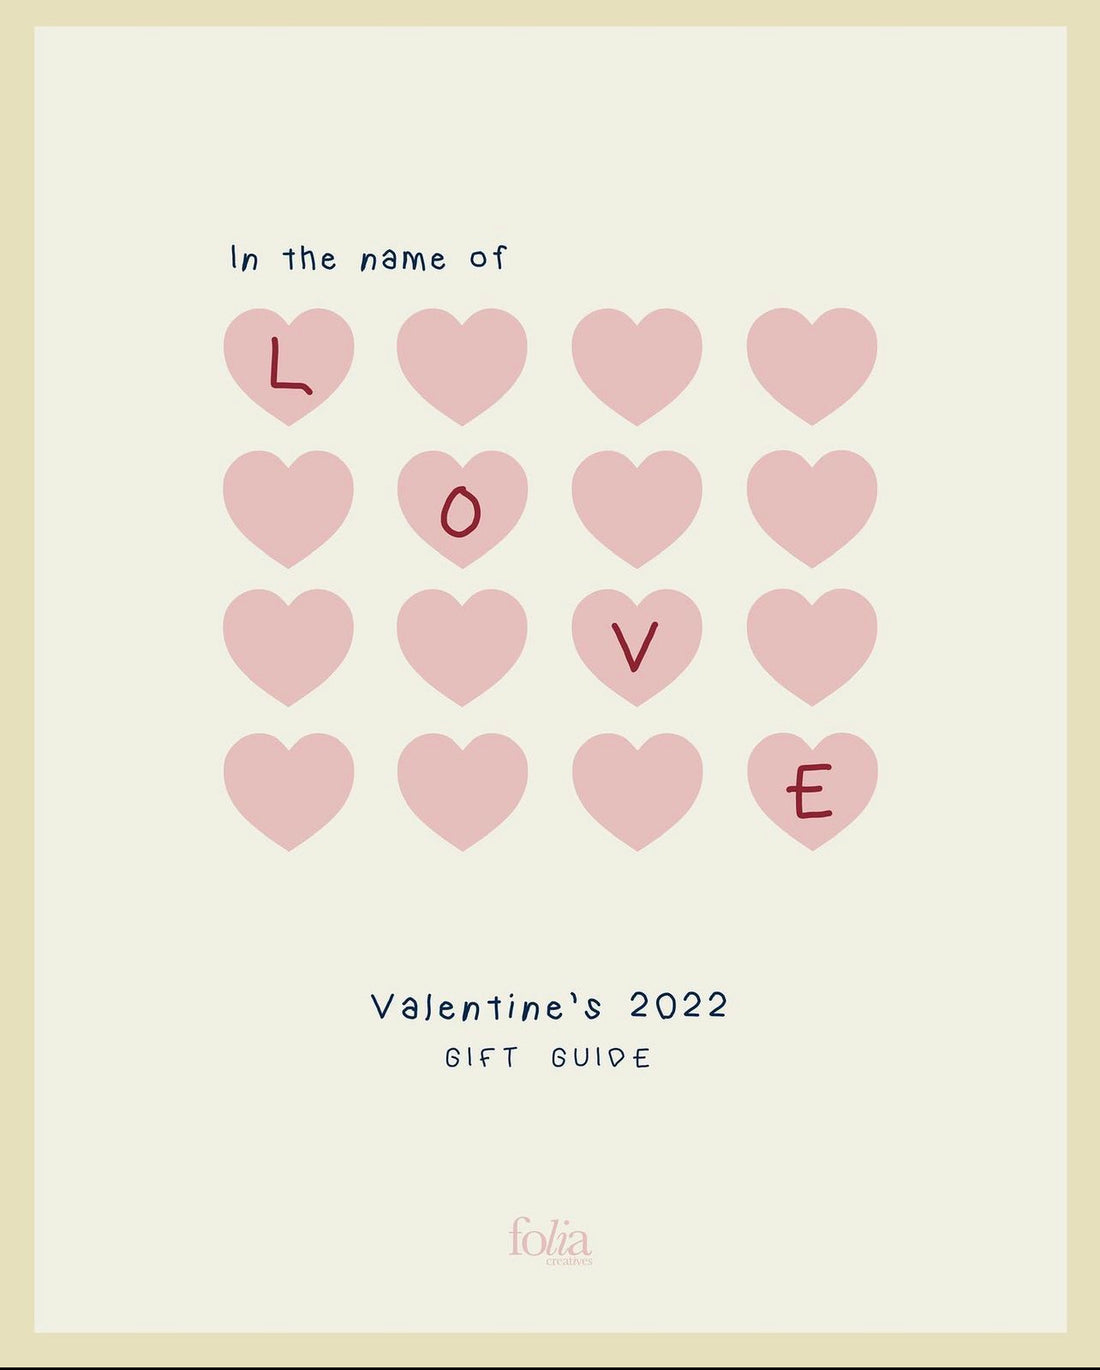 Valentine's Day 2022 - In the name of Love